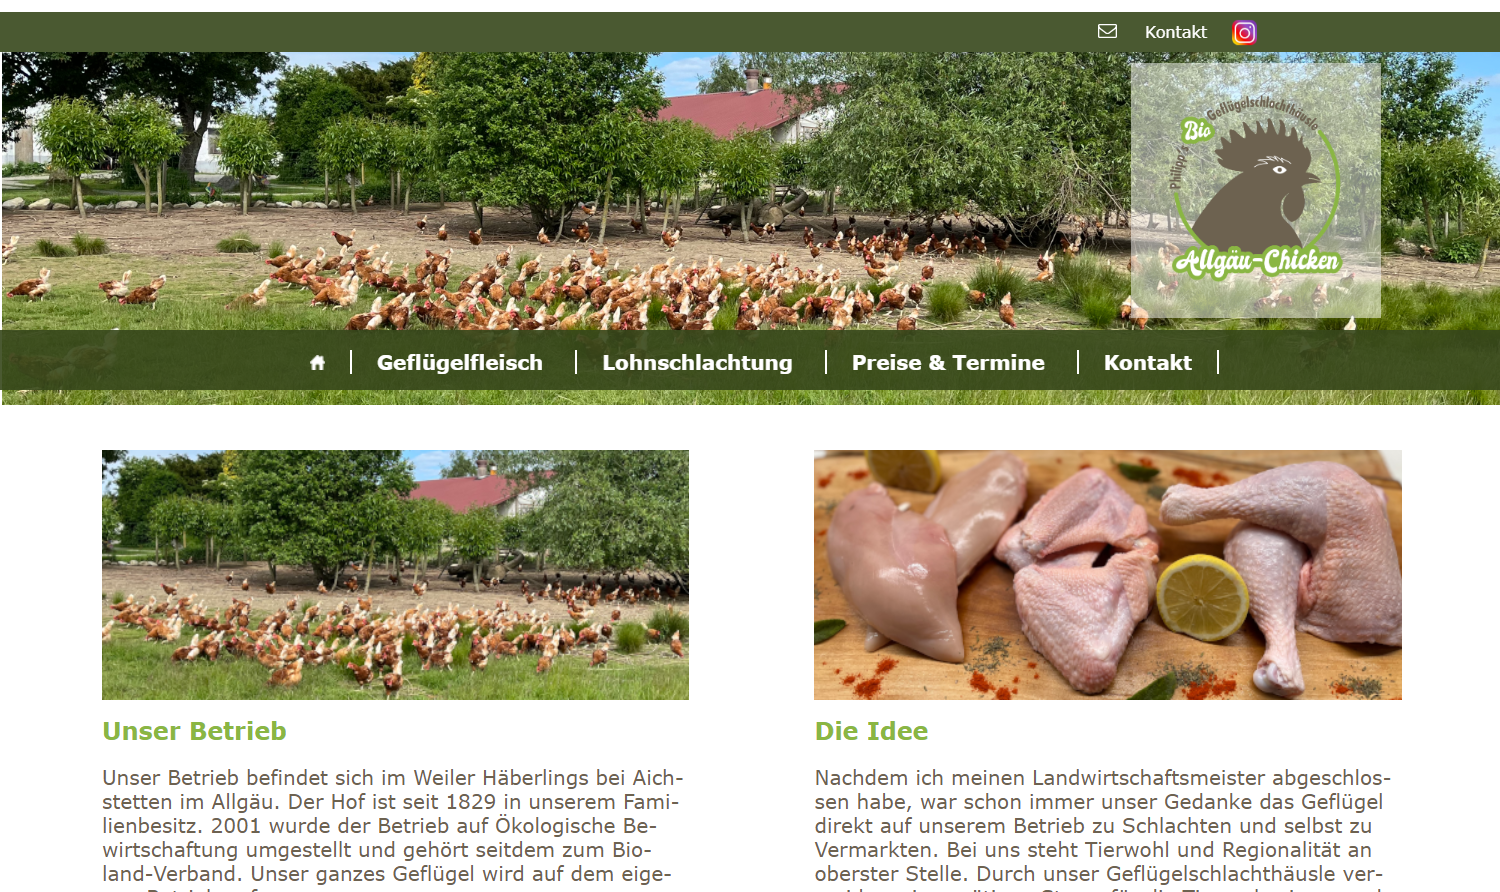 www.allgaeu-chicken.de